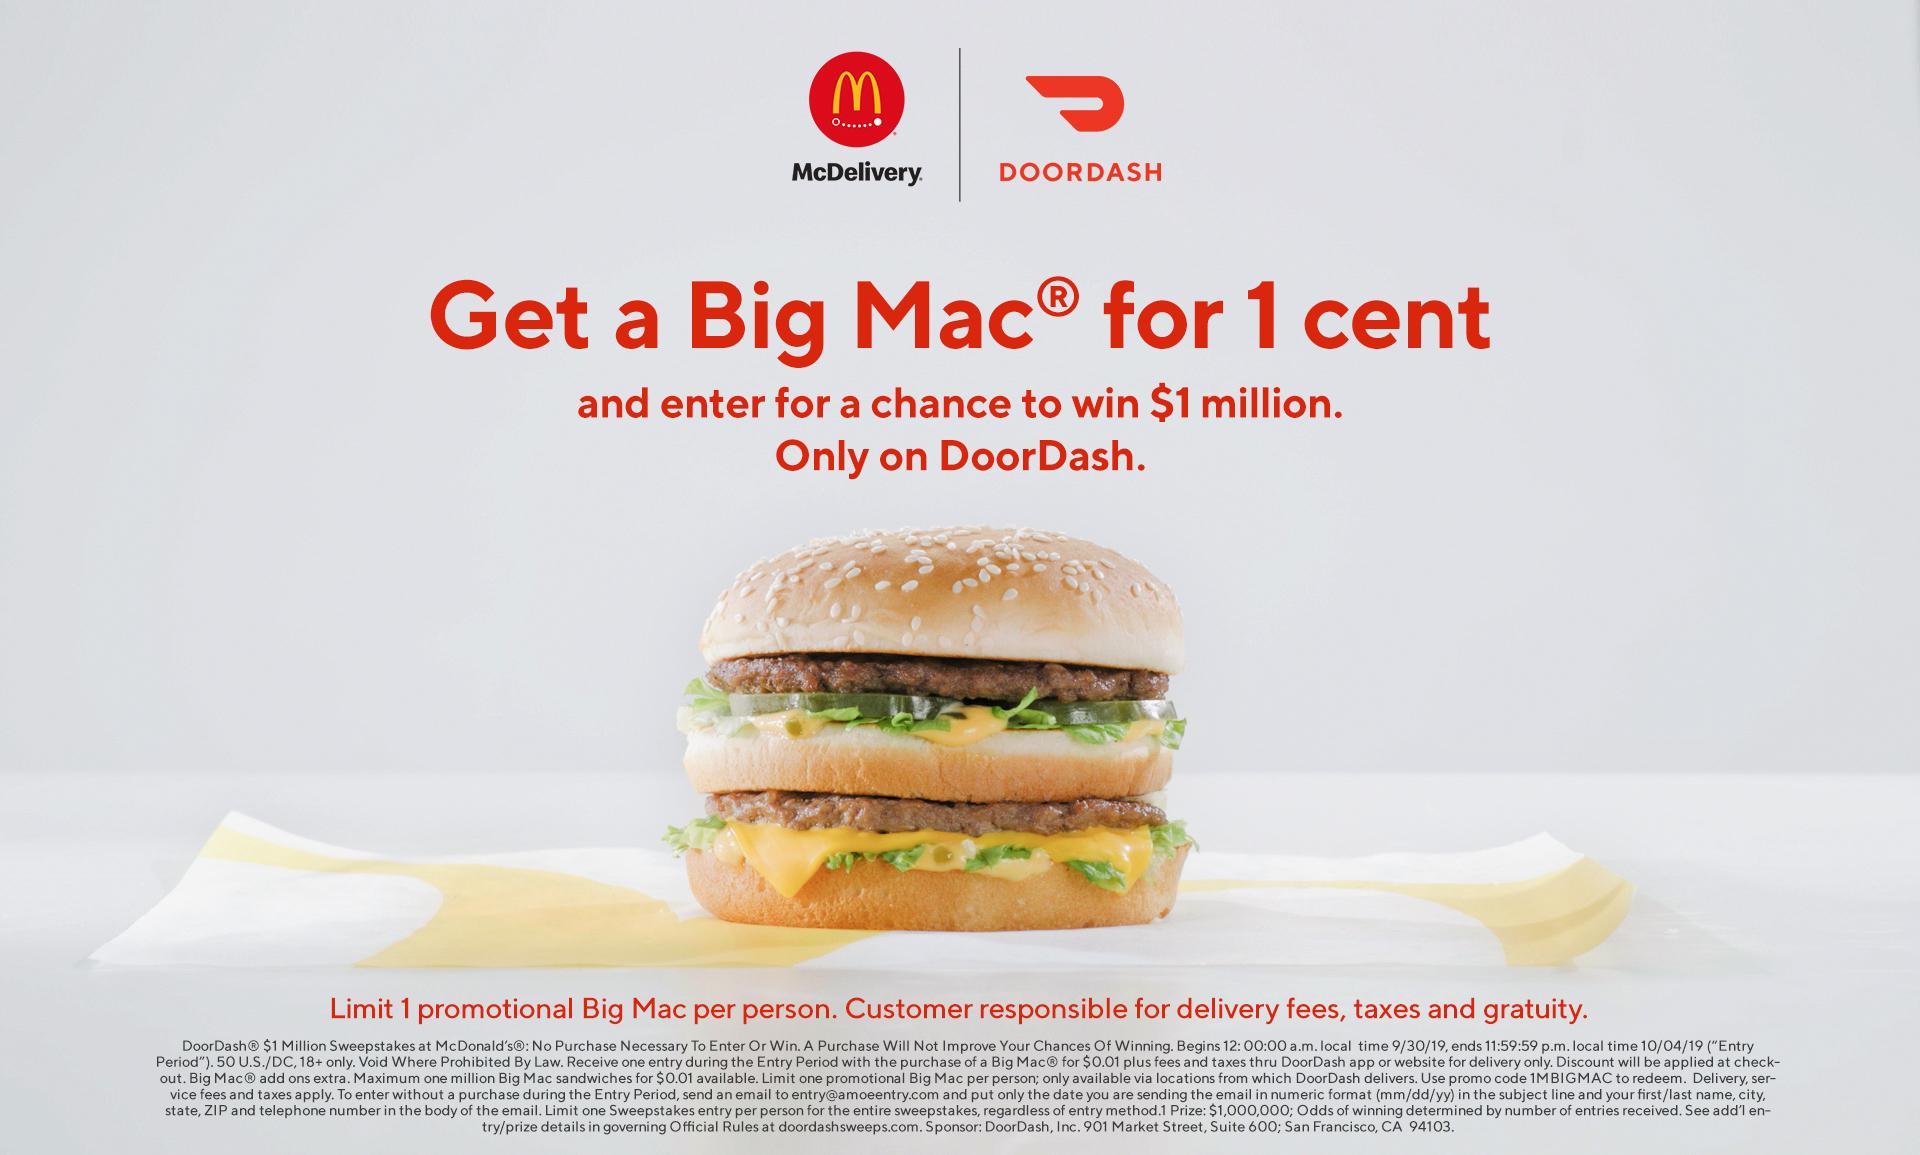 "Get a Big Mac for 1 cent, Only on DoorDash" McDonald's x DoorDash commercial/promotion